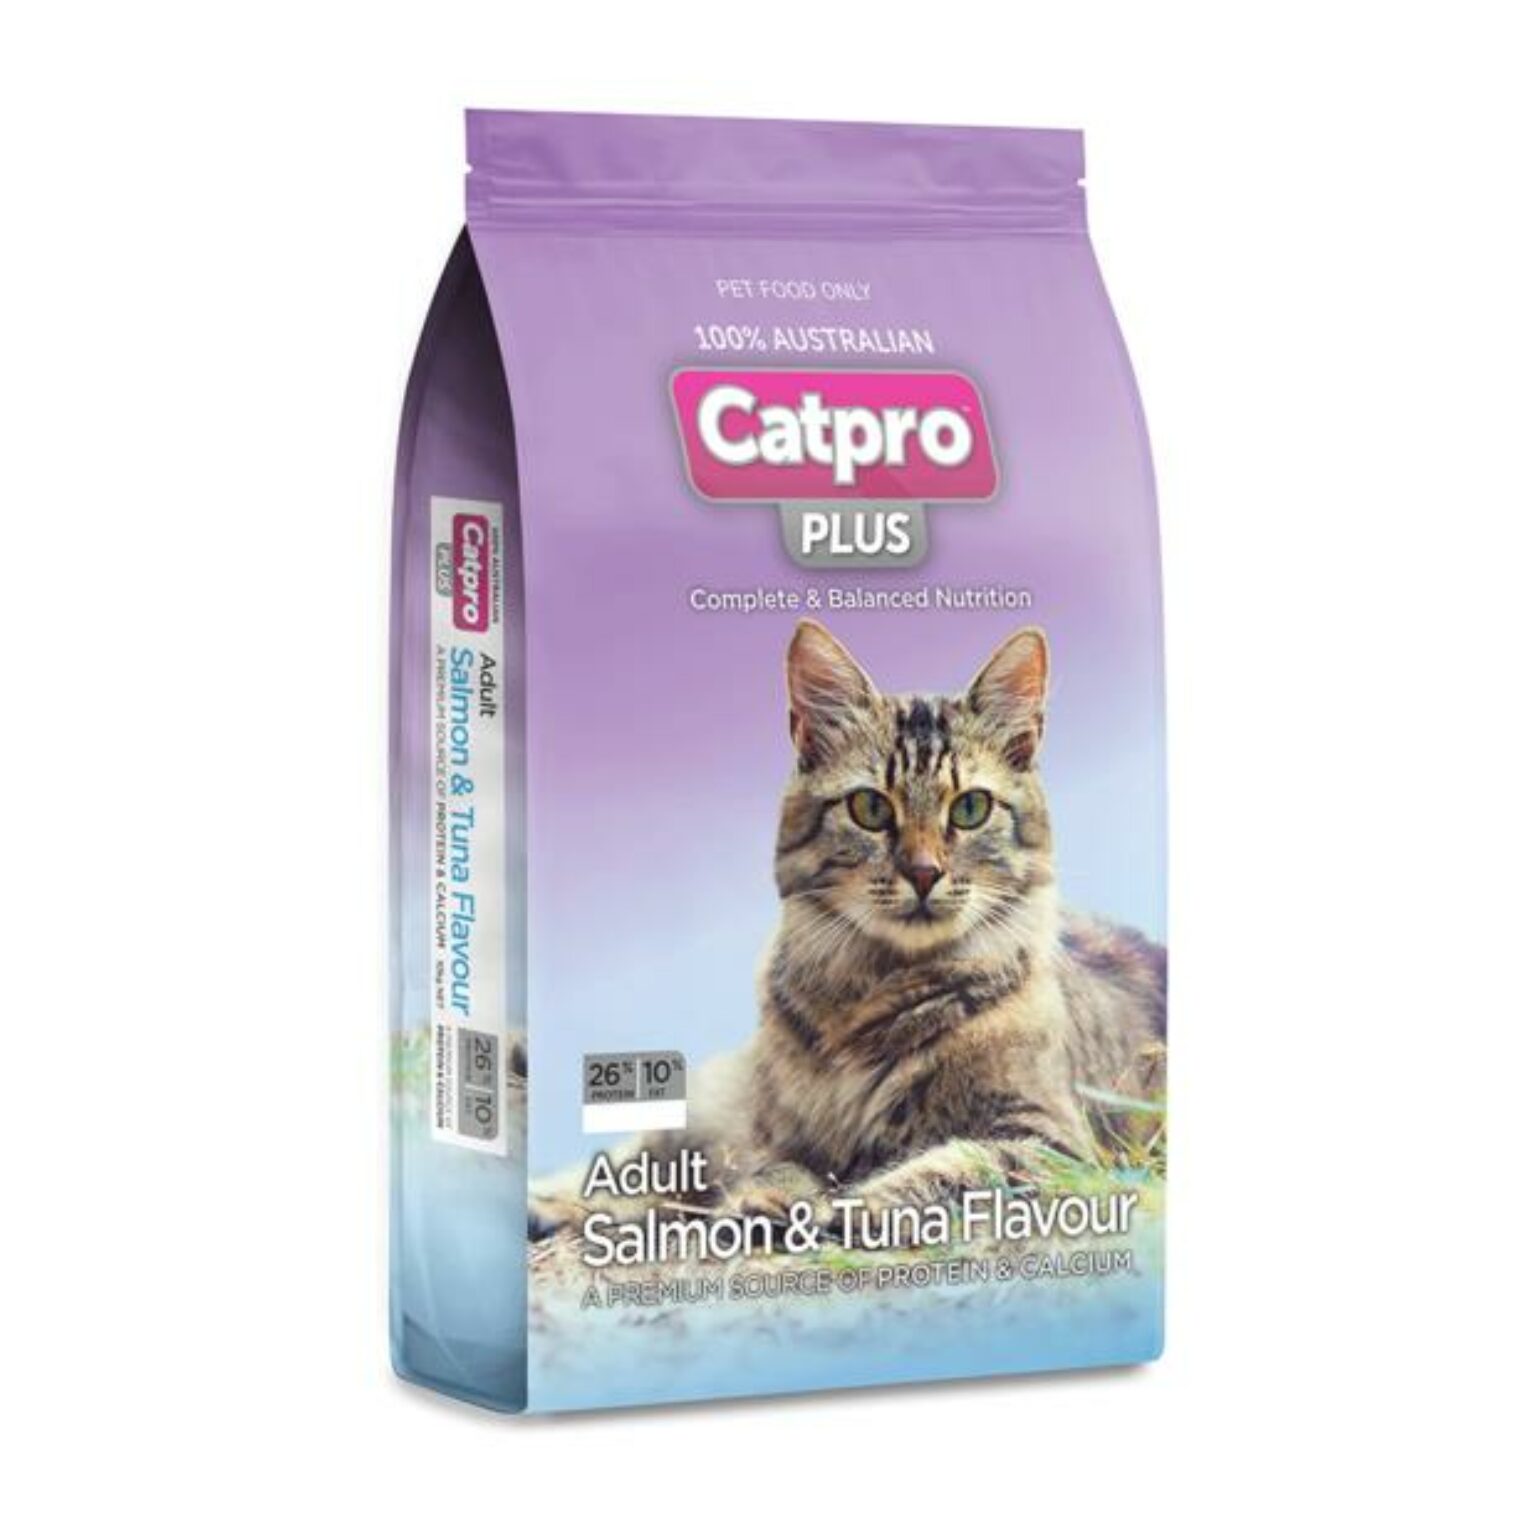 Catpro Plus Salmon And Tuna Dry Cat Food 10kg | Pet Food Reviews ...